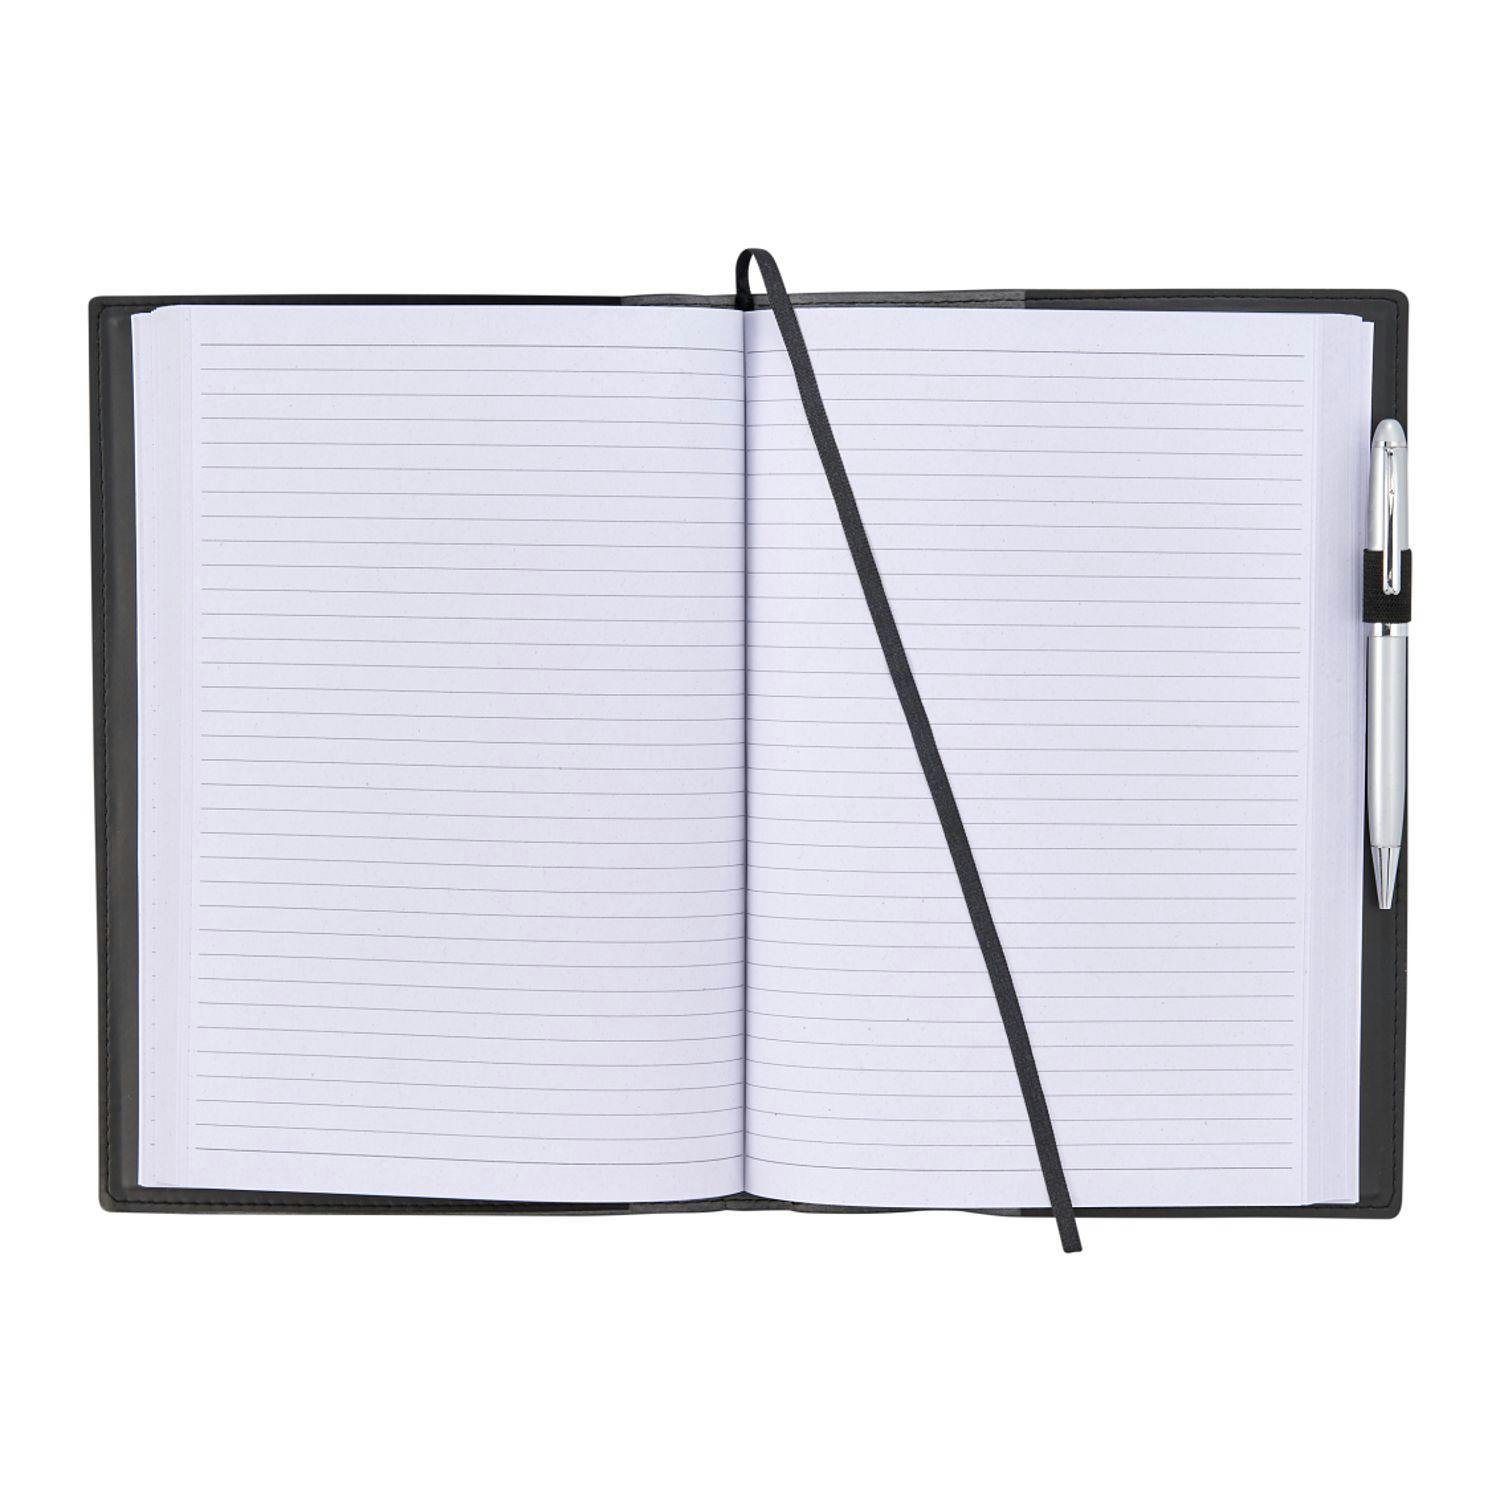 7” x 10” Mela Refillable JournalBook - additional Image 2